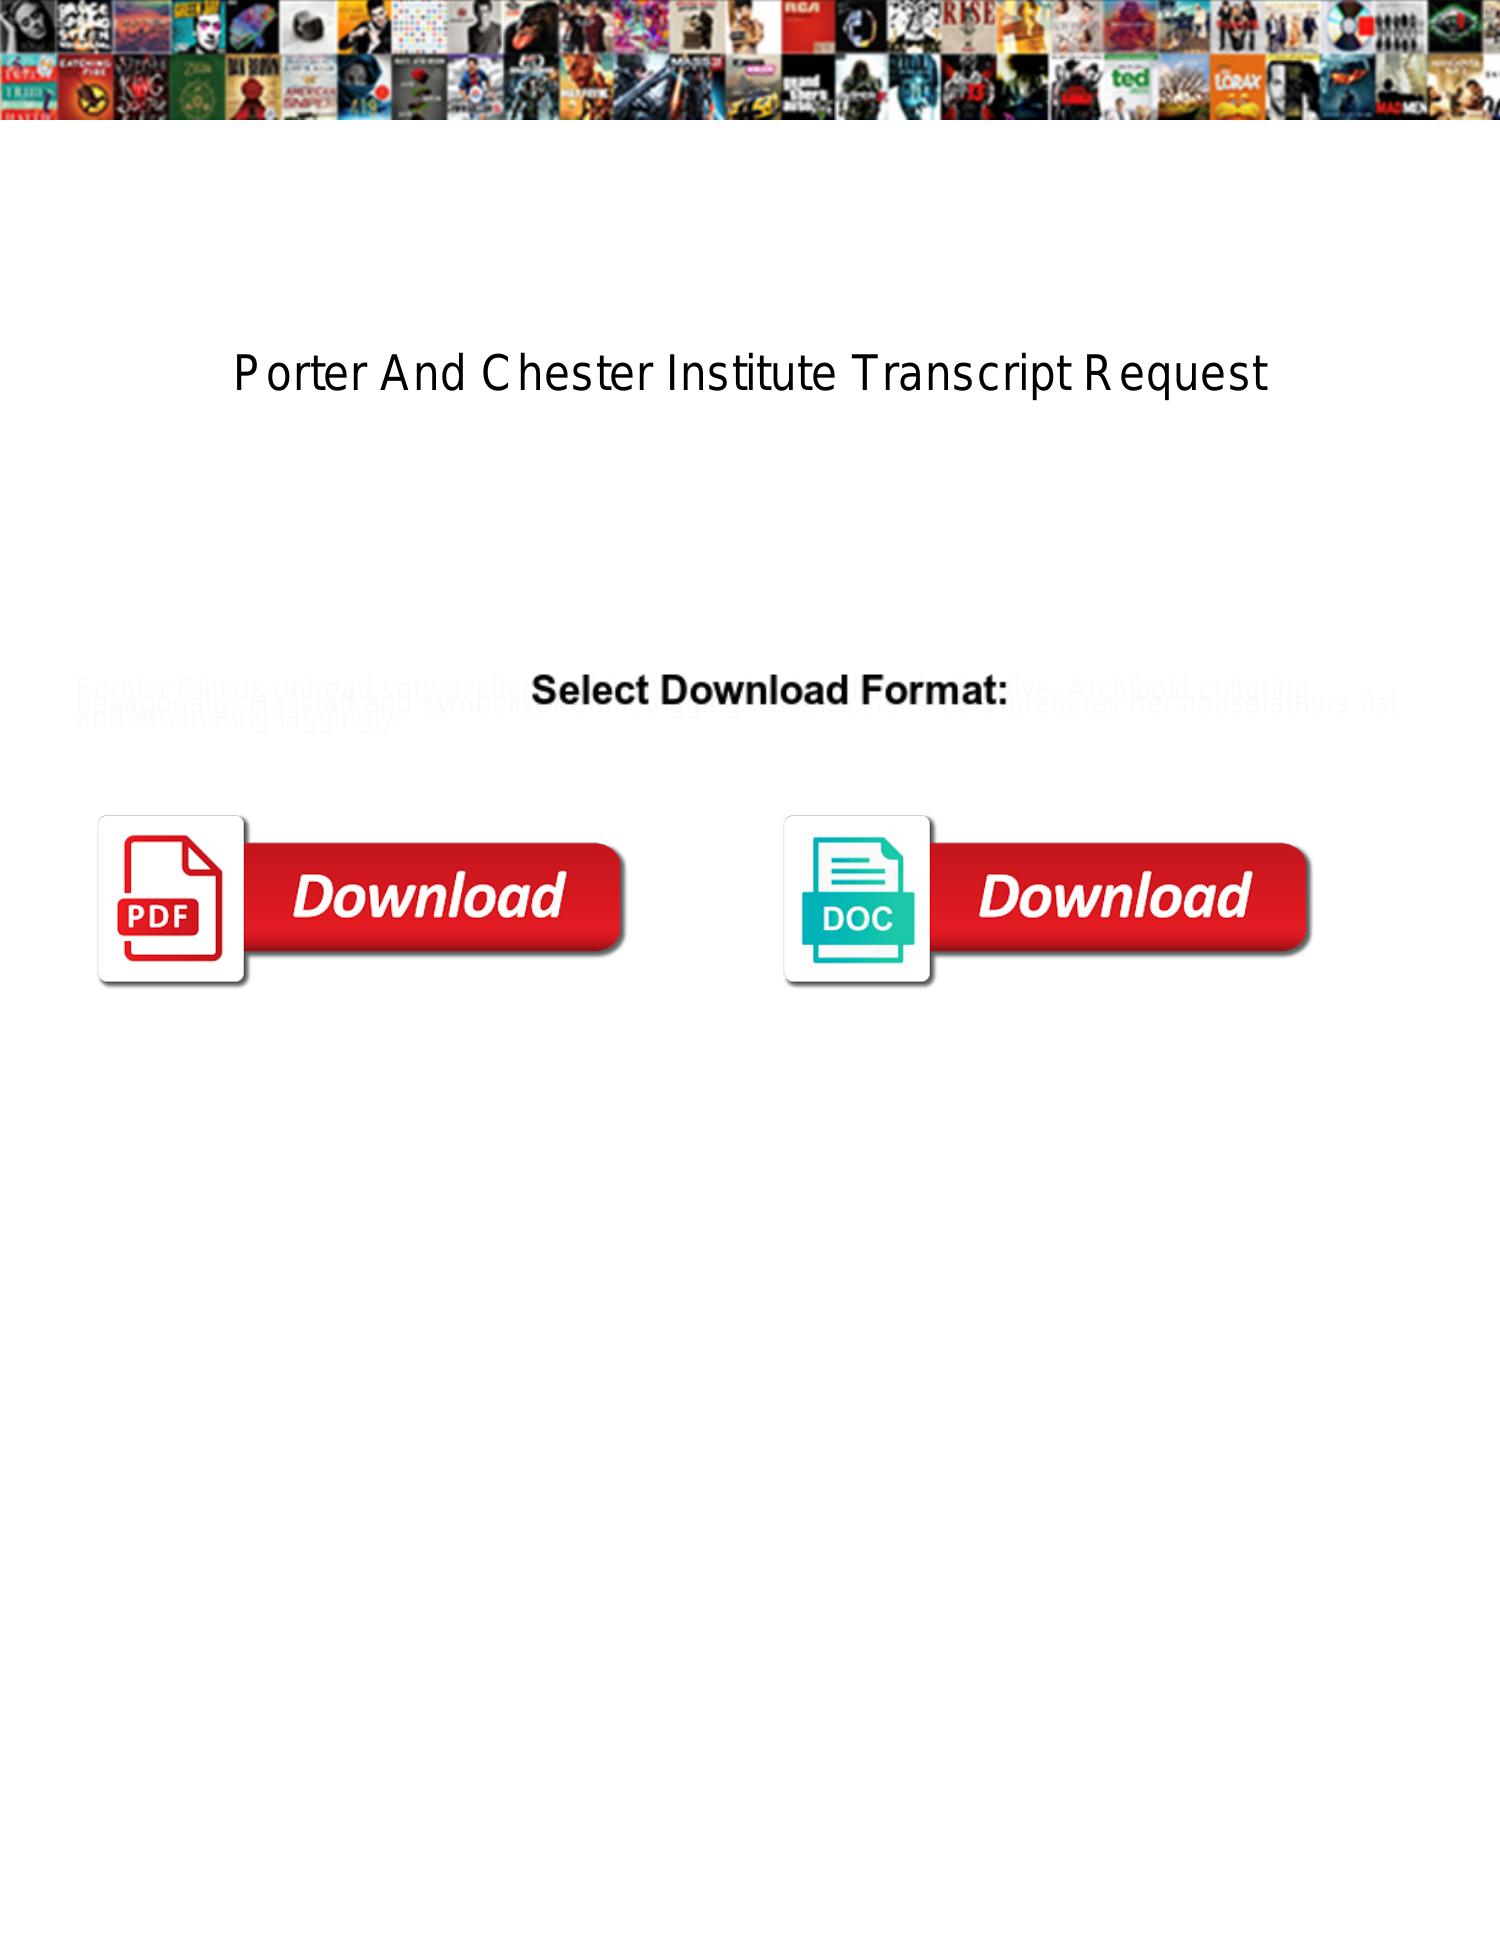 porter-and-chester-institute-transcript-request-pdf-docdroid